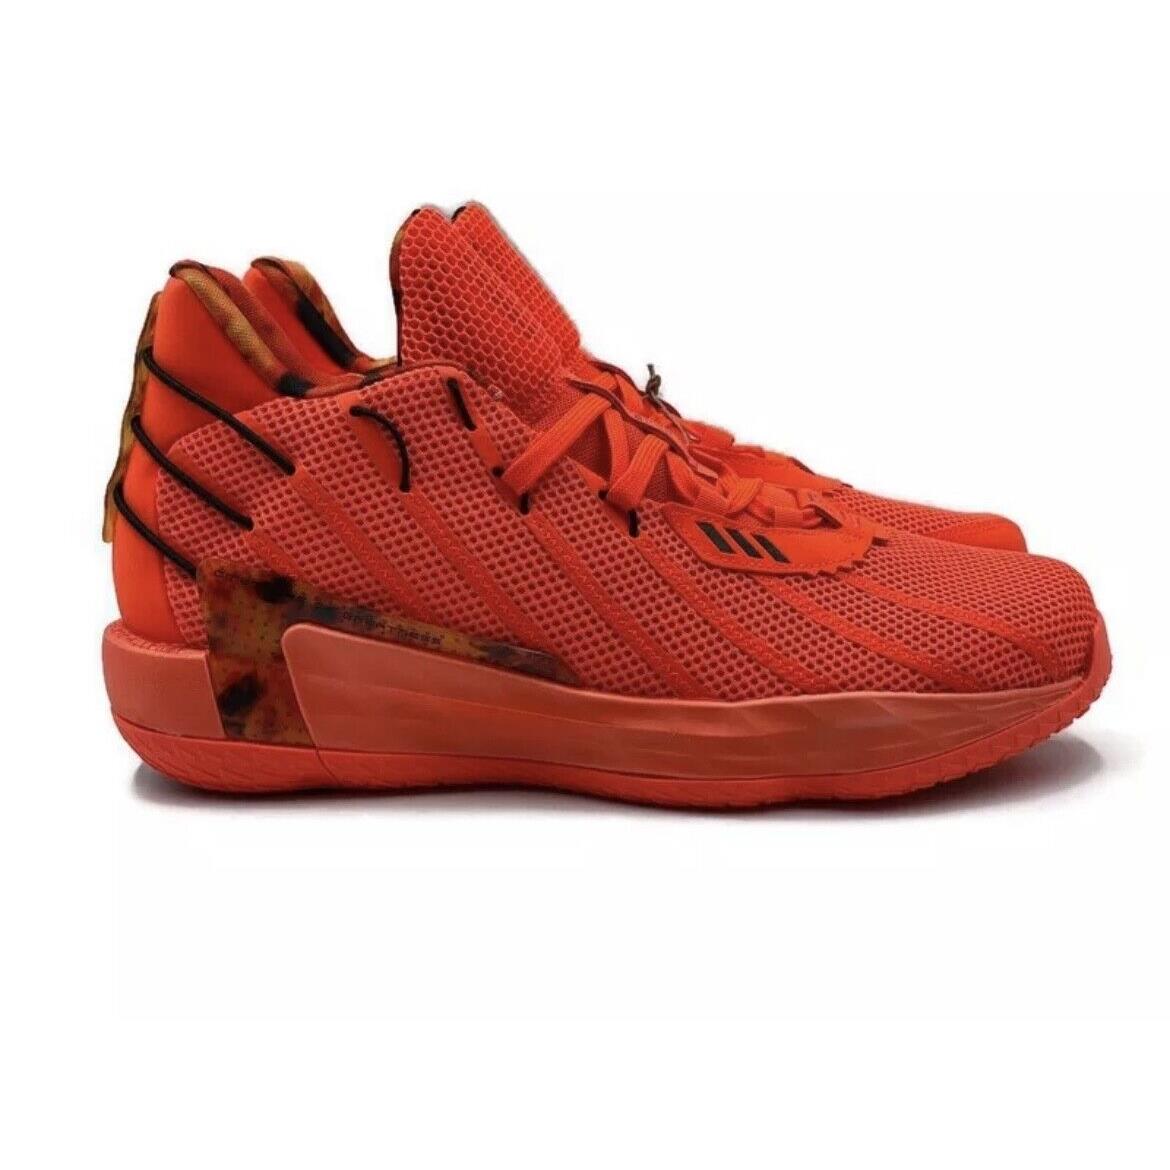 Adidas Dame 7 Gca Mens Sz 7.5-8 Basketball Shoe Red Black Athletic Sneaker